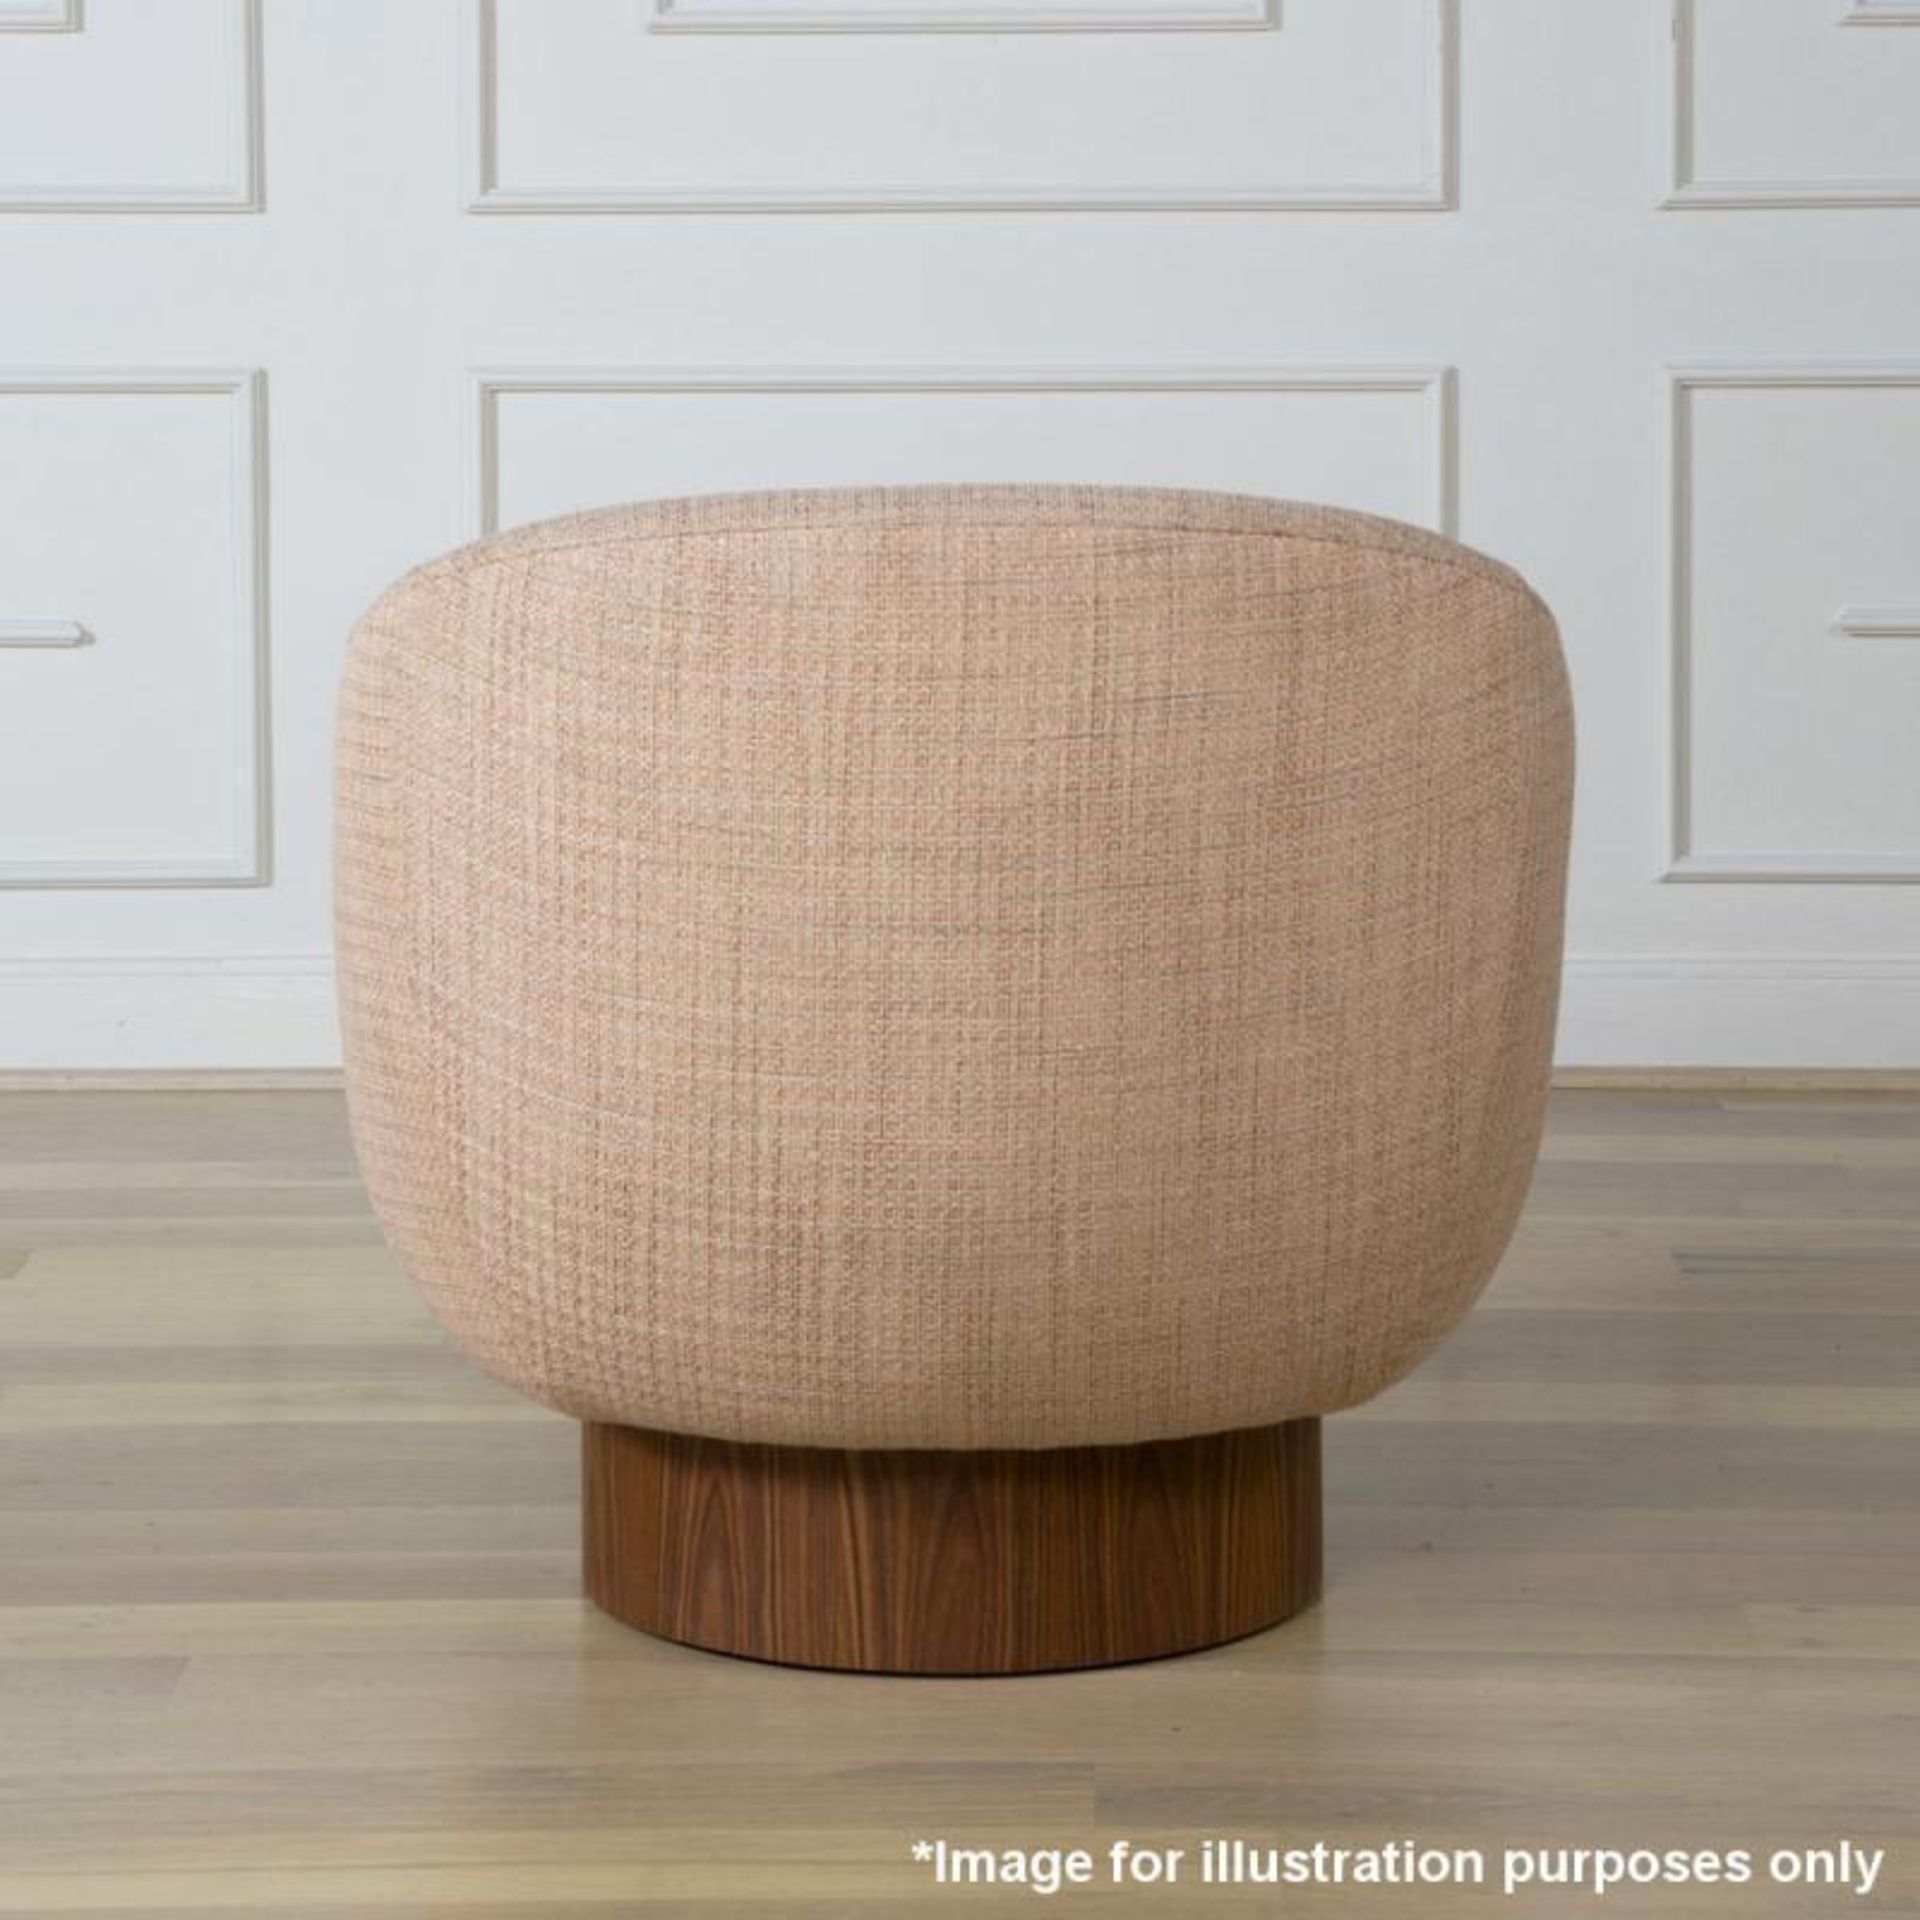 1 x KELLY WEARSTLER Sonara Swivel Chair Rosewood - Dimensions: 31” W x 35” D x 31” H - Ex-Display In - Image 11 of 28